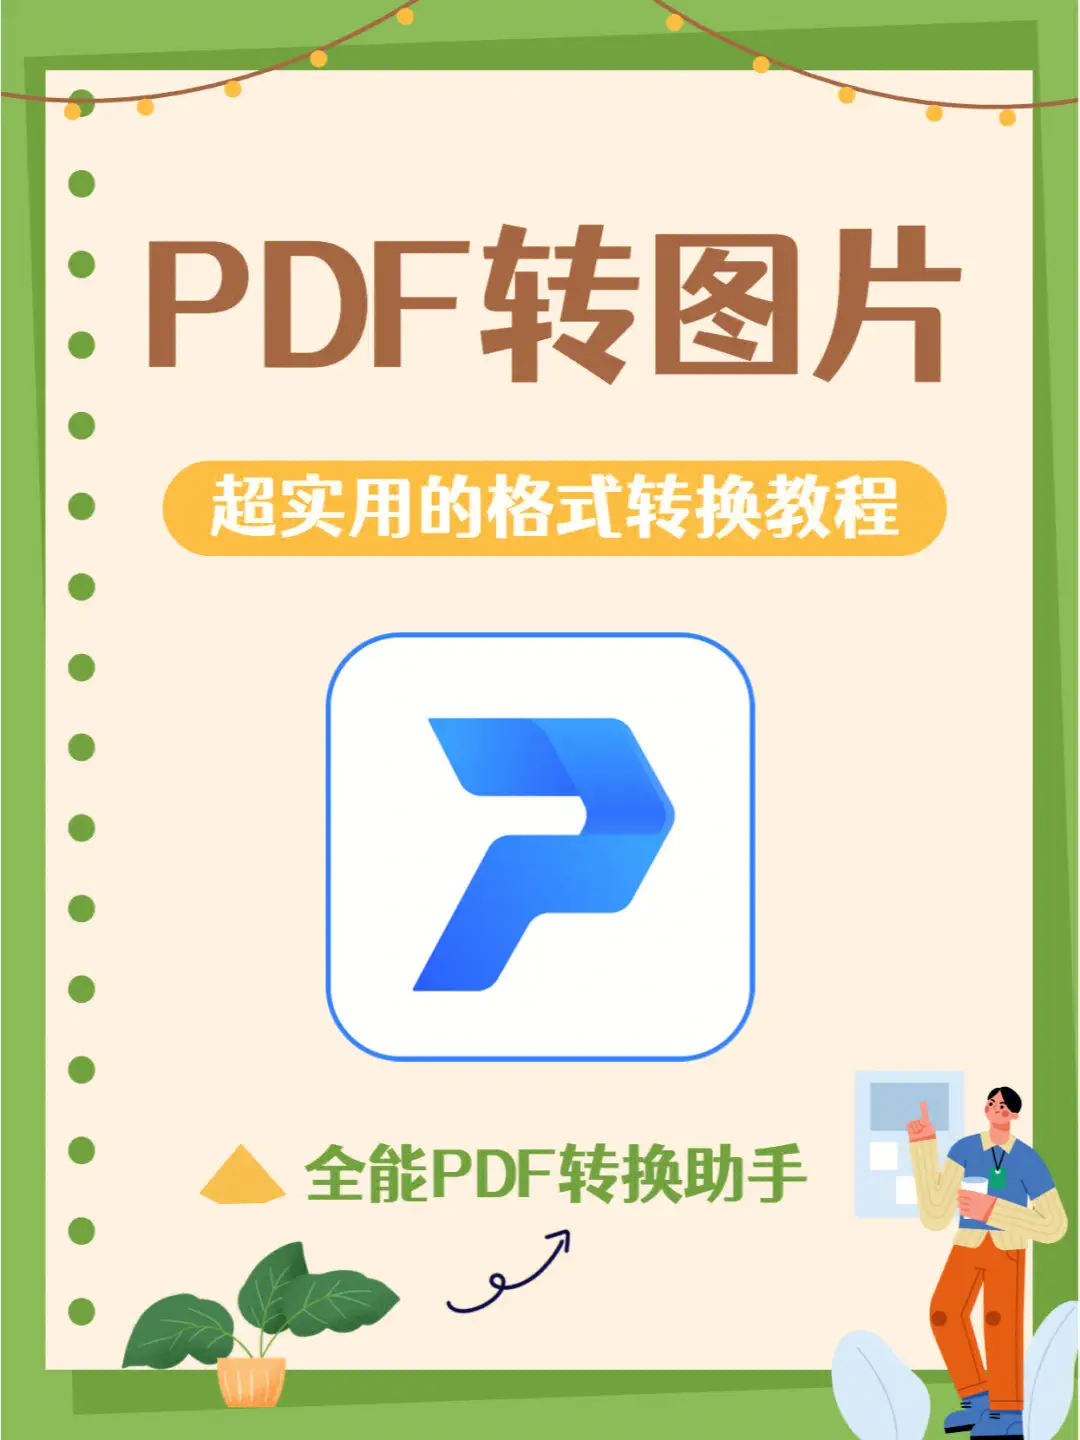 PDF文件转换为图片的方法